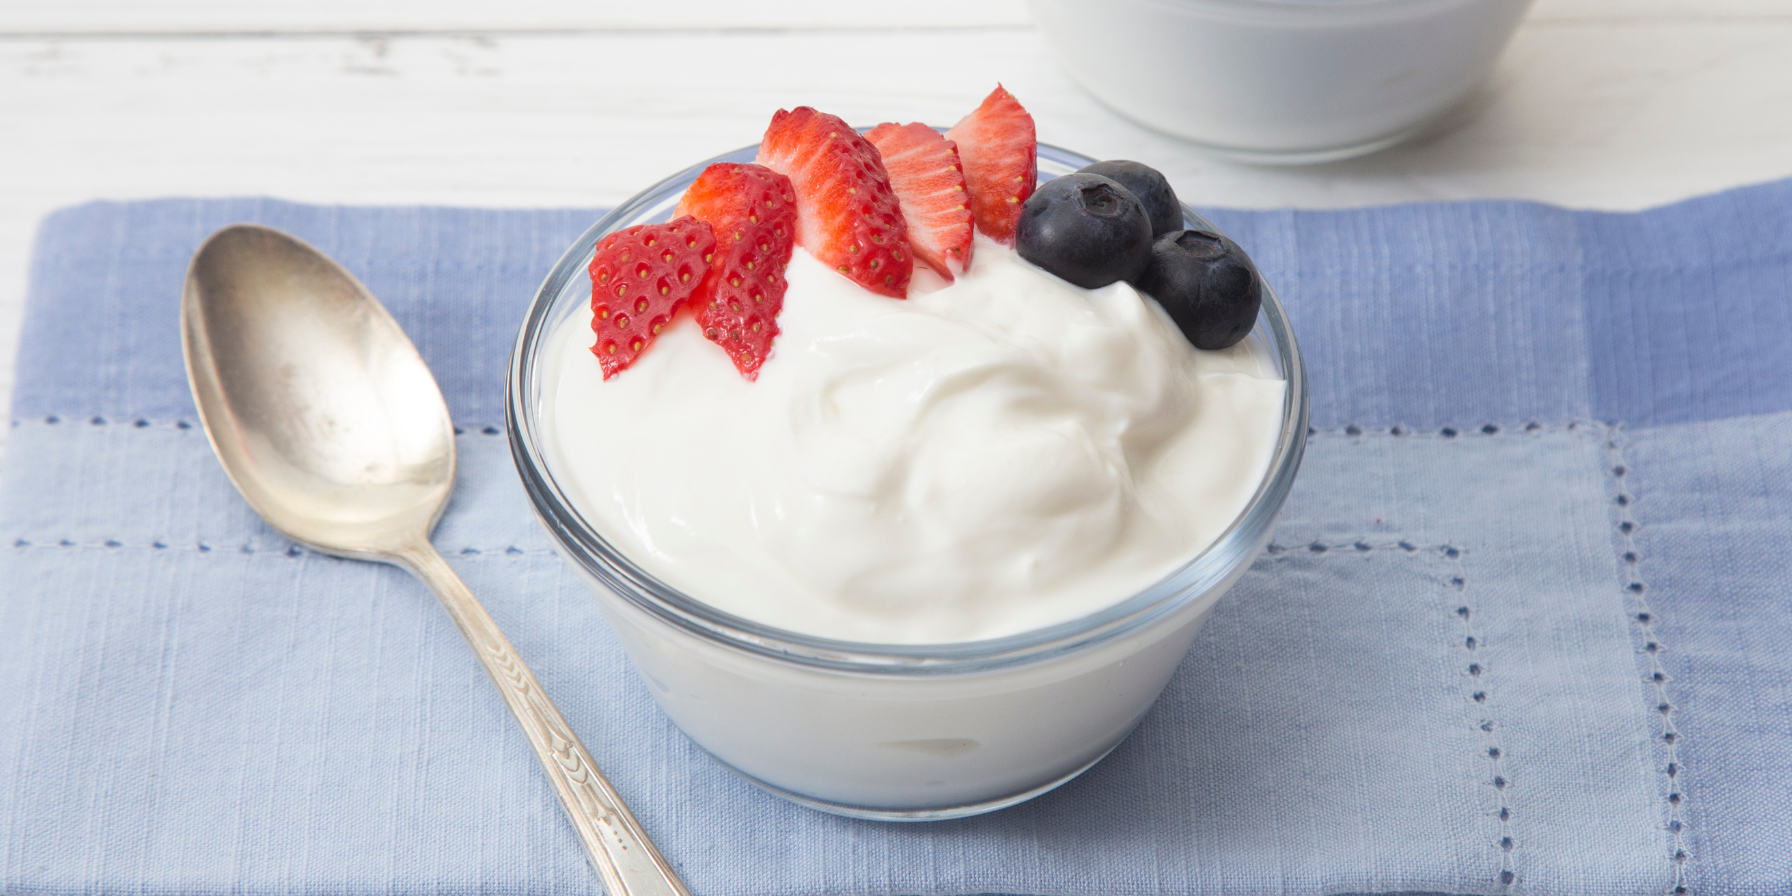 Brain Booster Yogurt Bowl